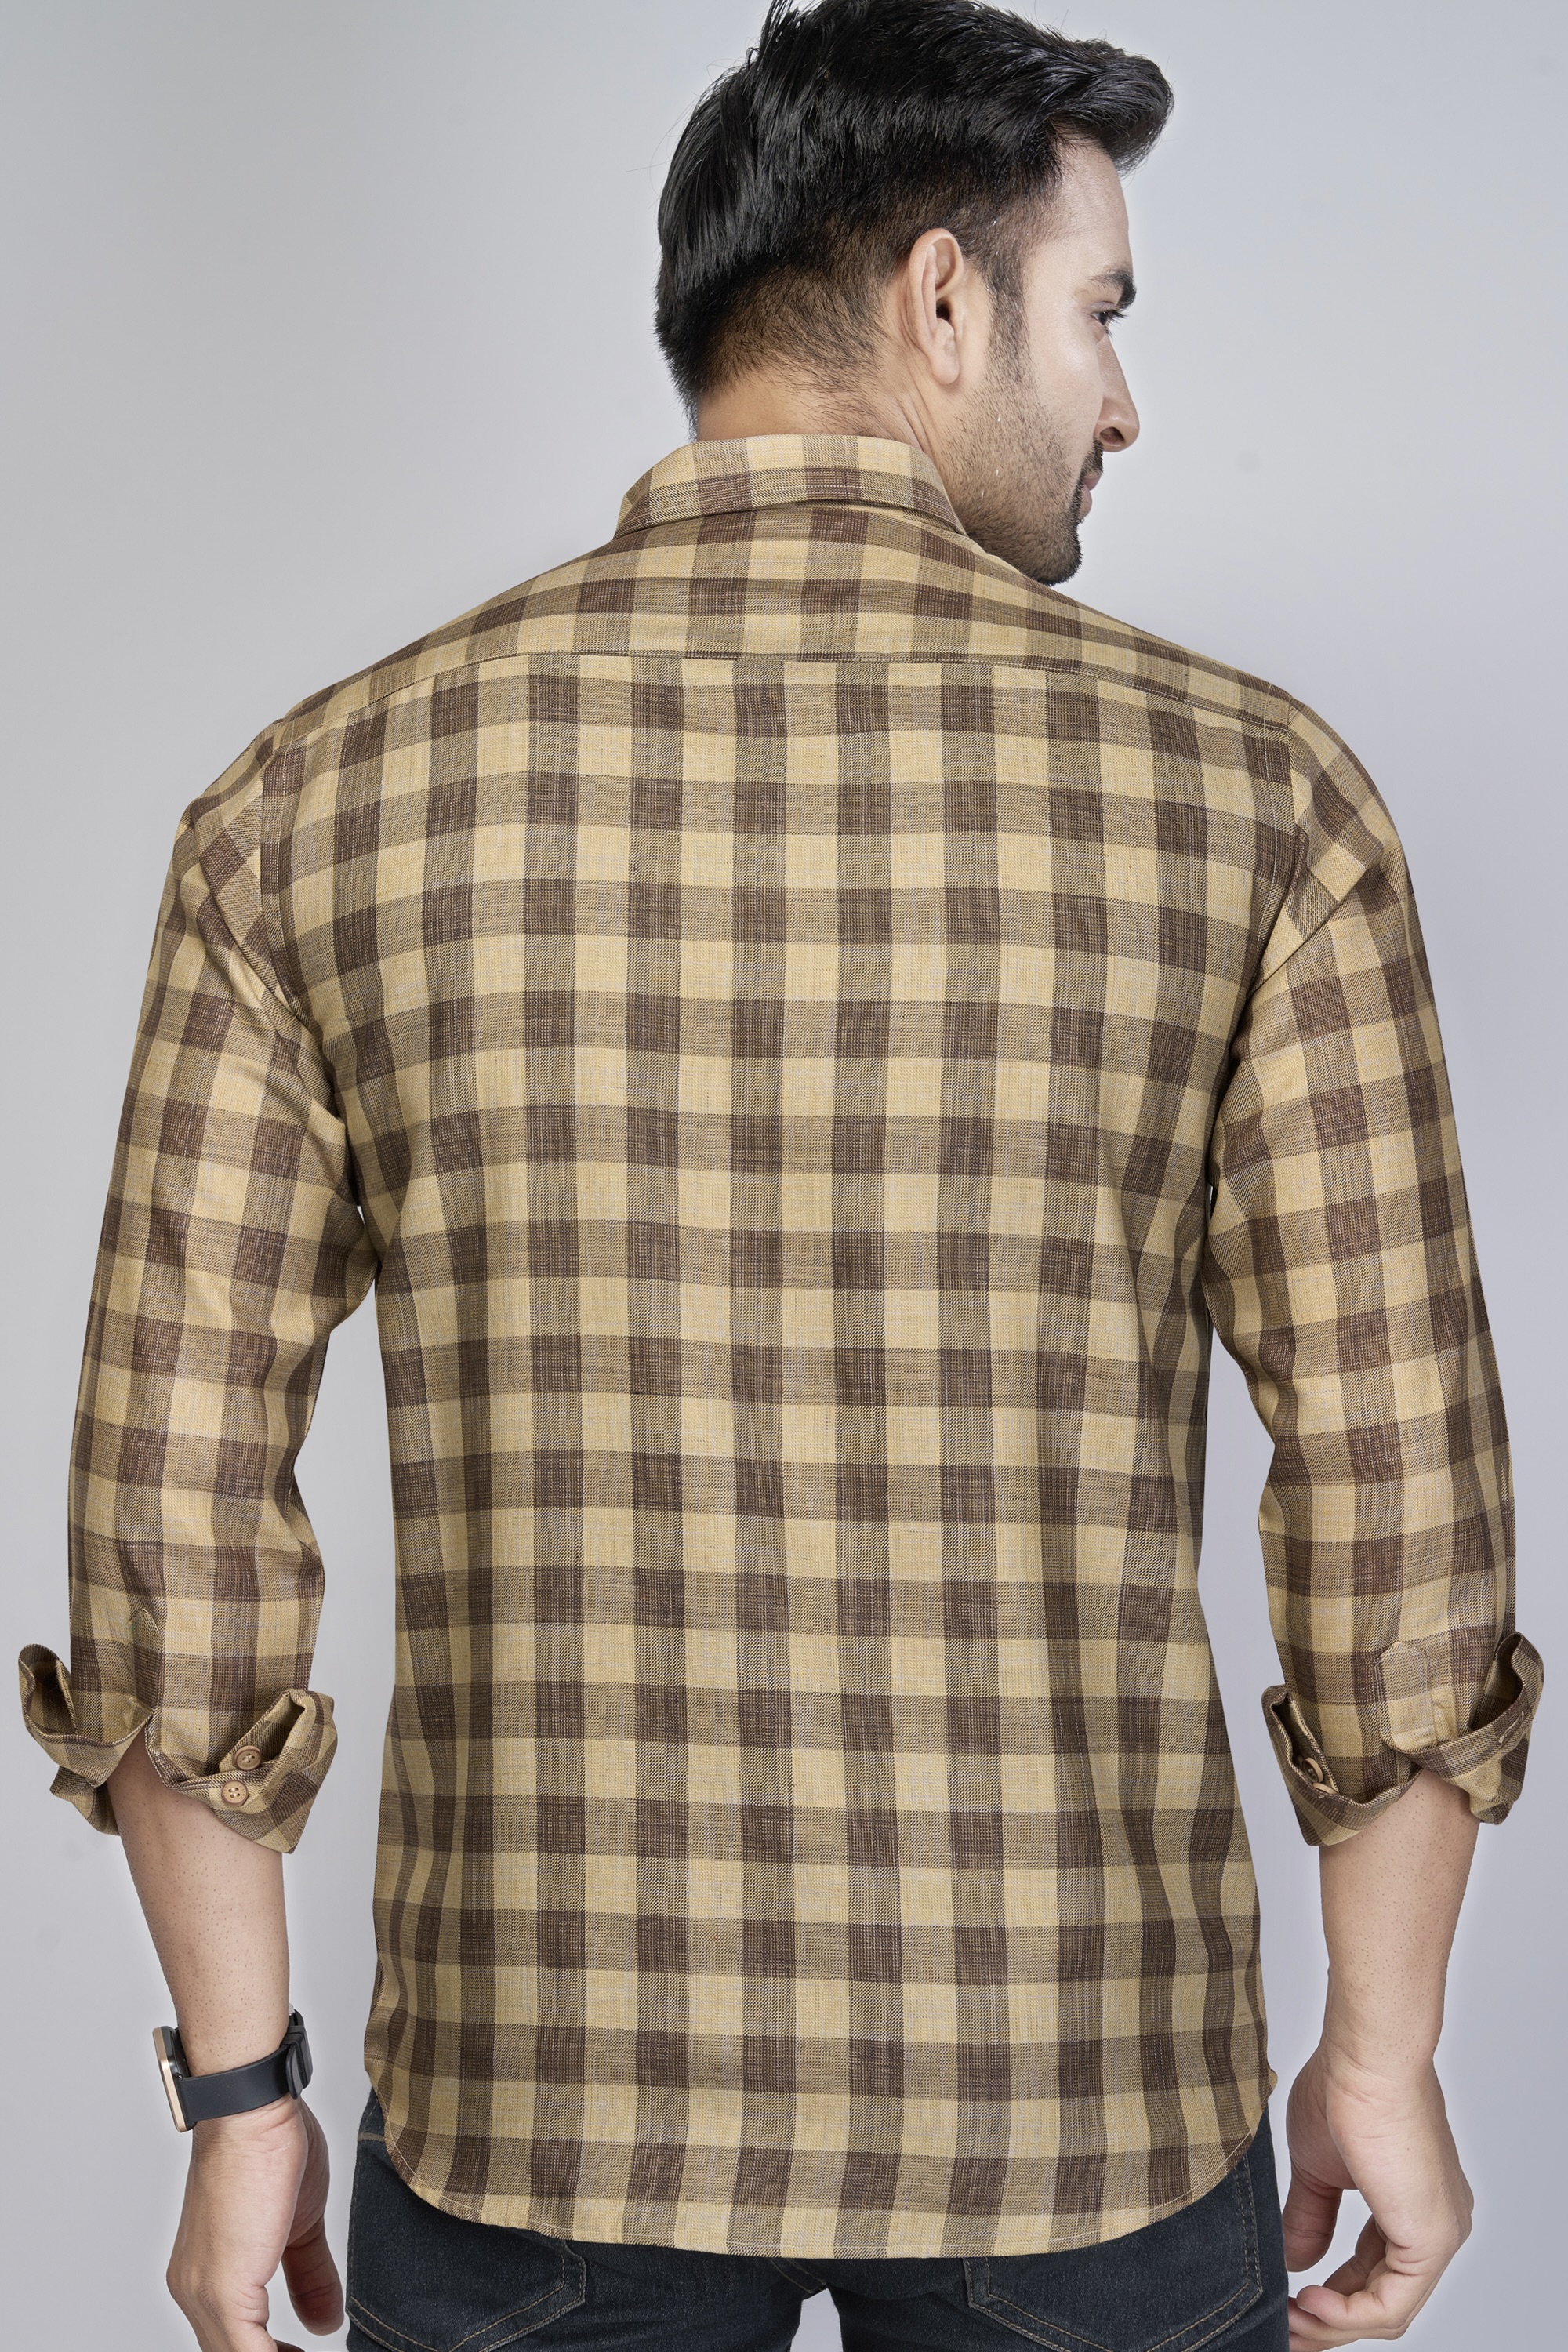 Brown Checks Shirt for Men